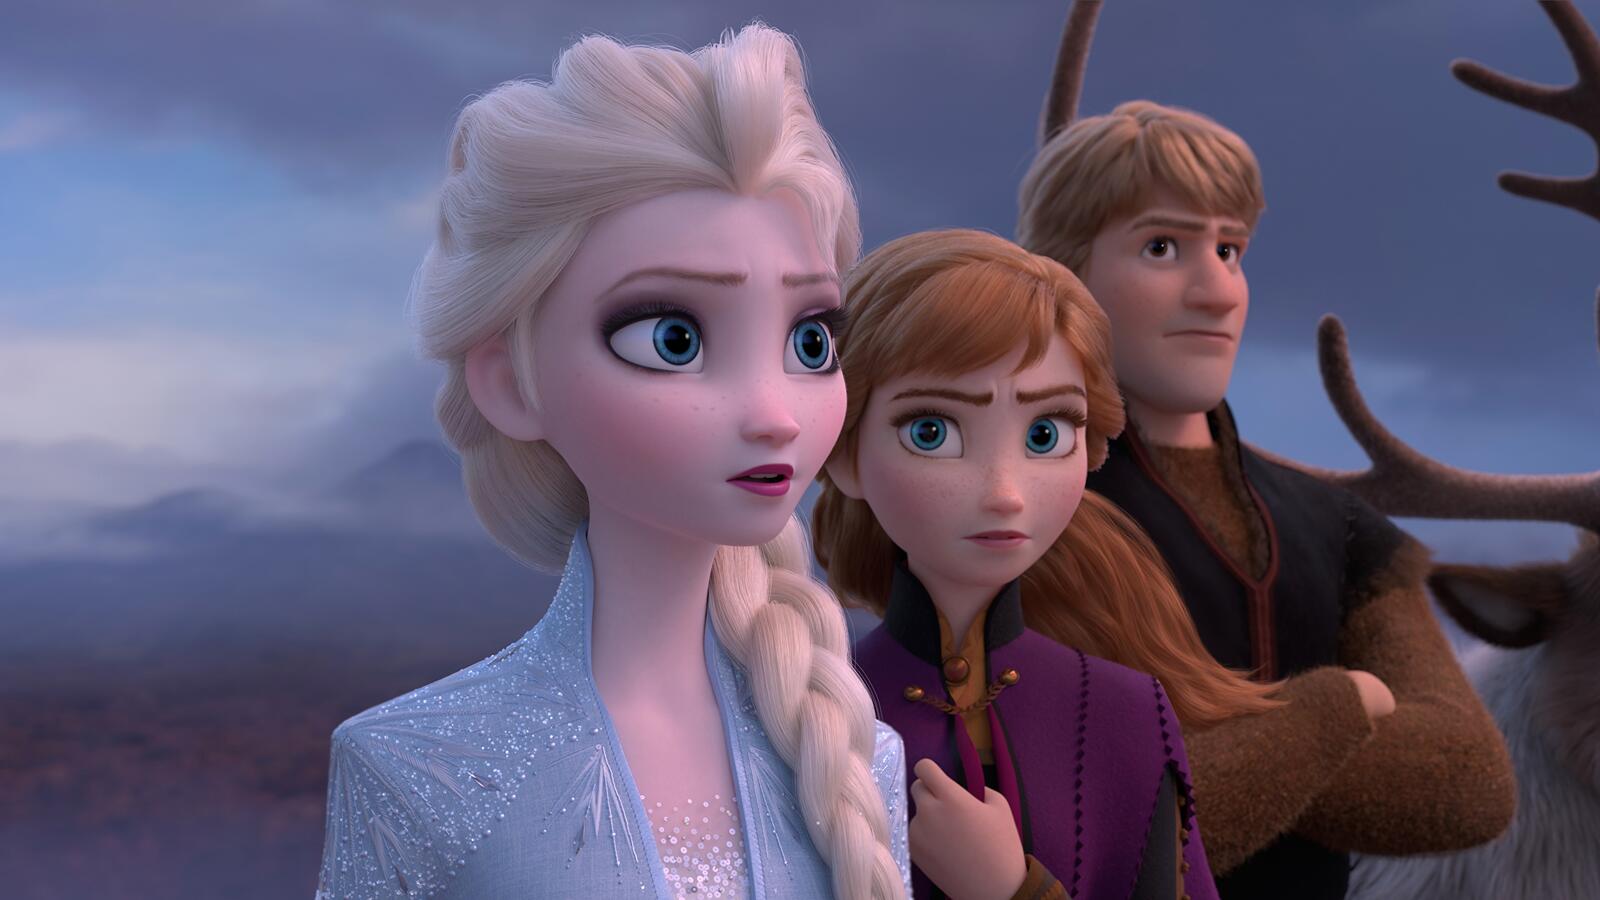 Wallpapers animation Frozen Elsa on the desktop